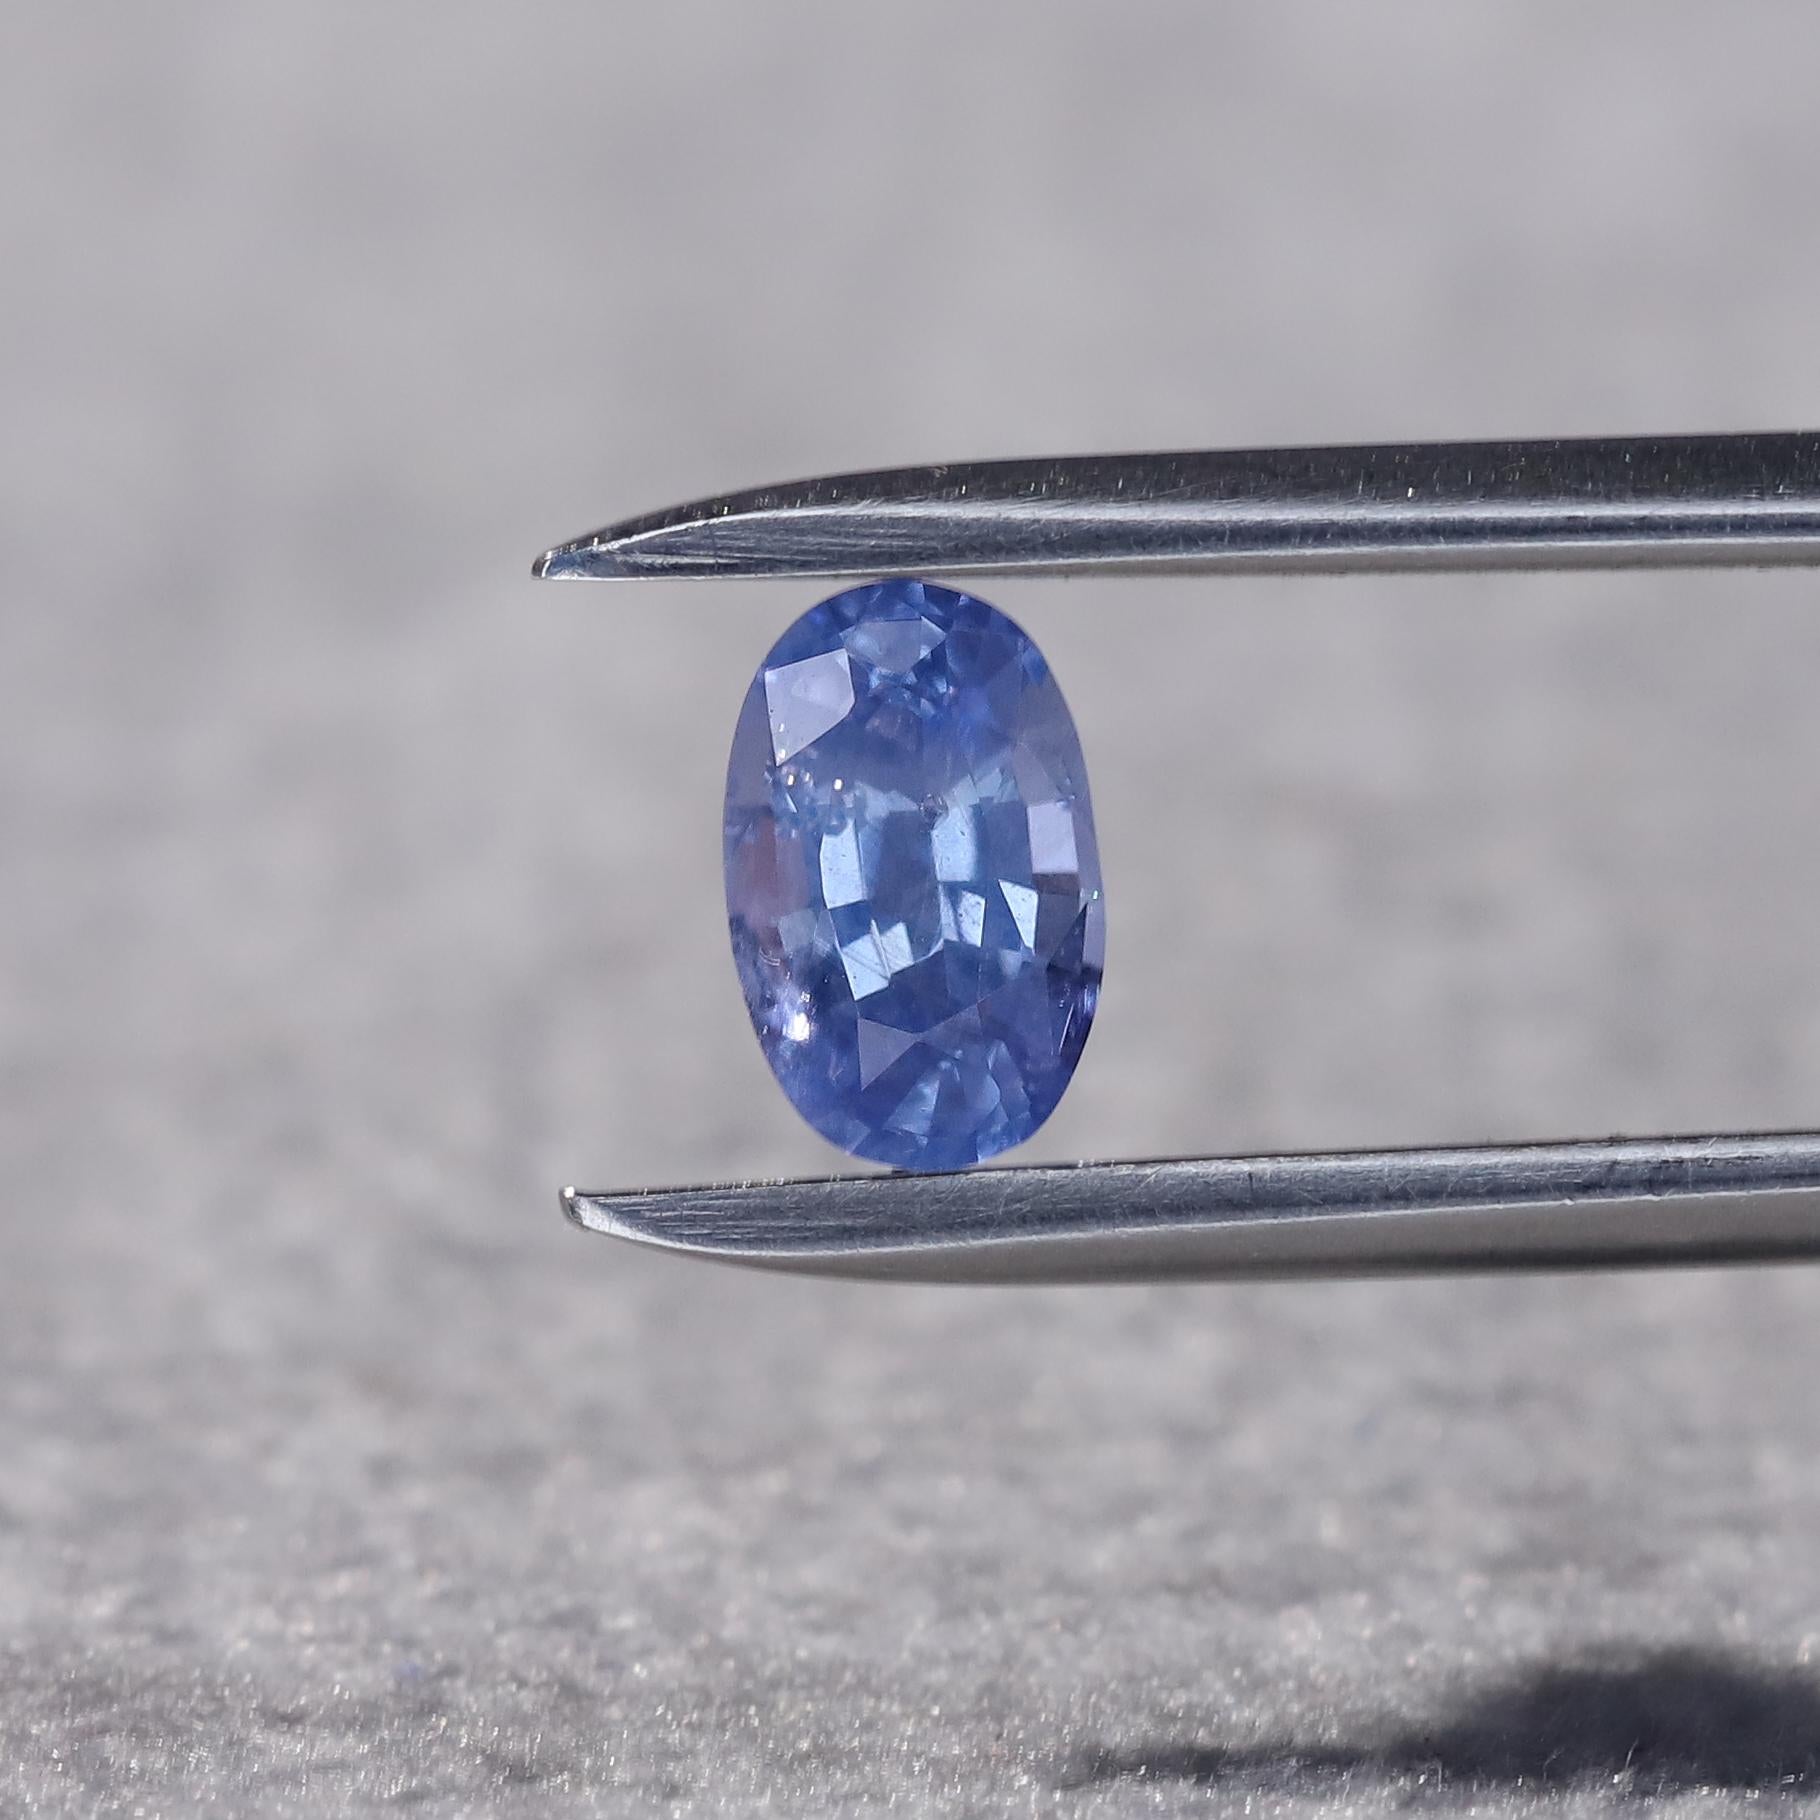 Oval Cut 0.73 Carat Petite Natural Unheated Blue Sapphire Loose Gemstone from Sri Lanka